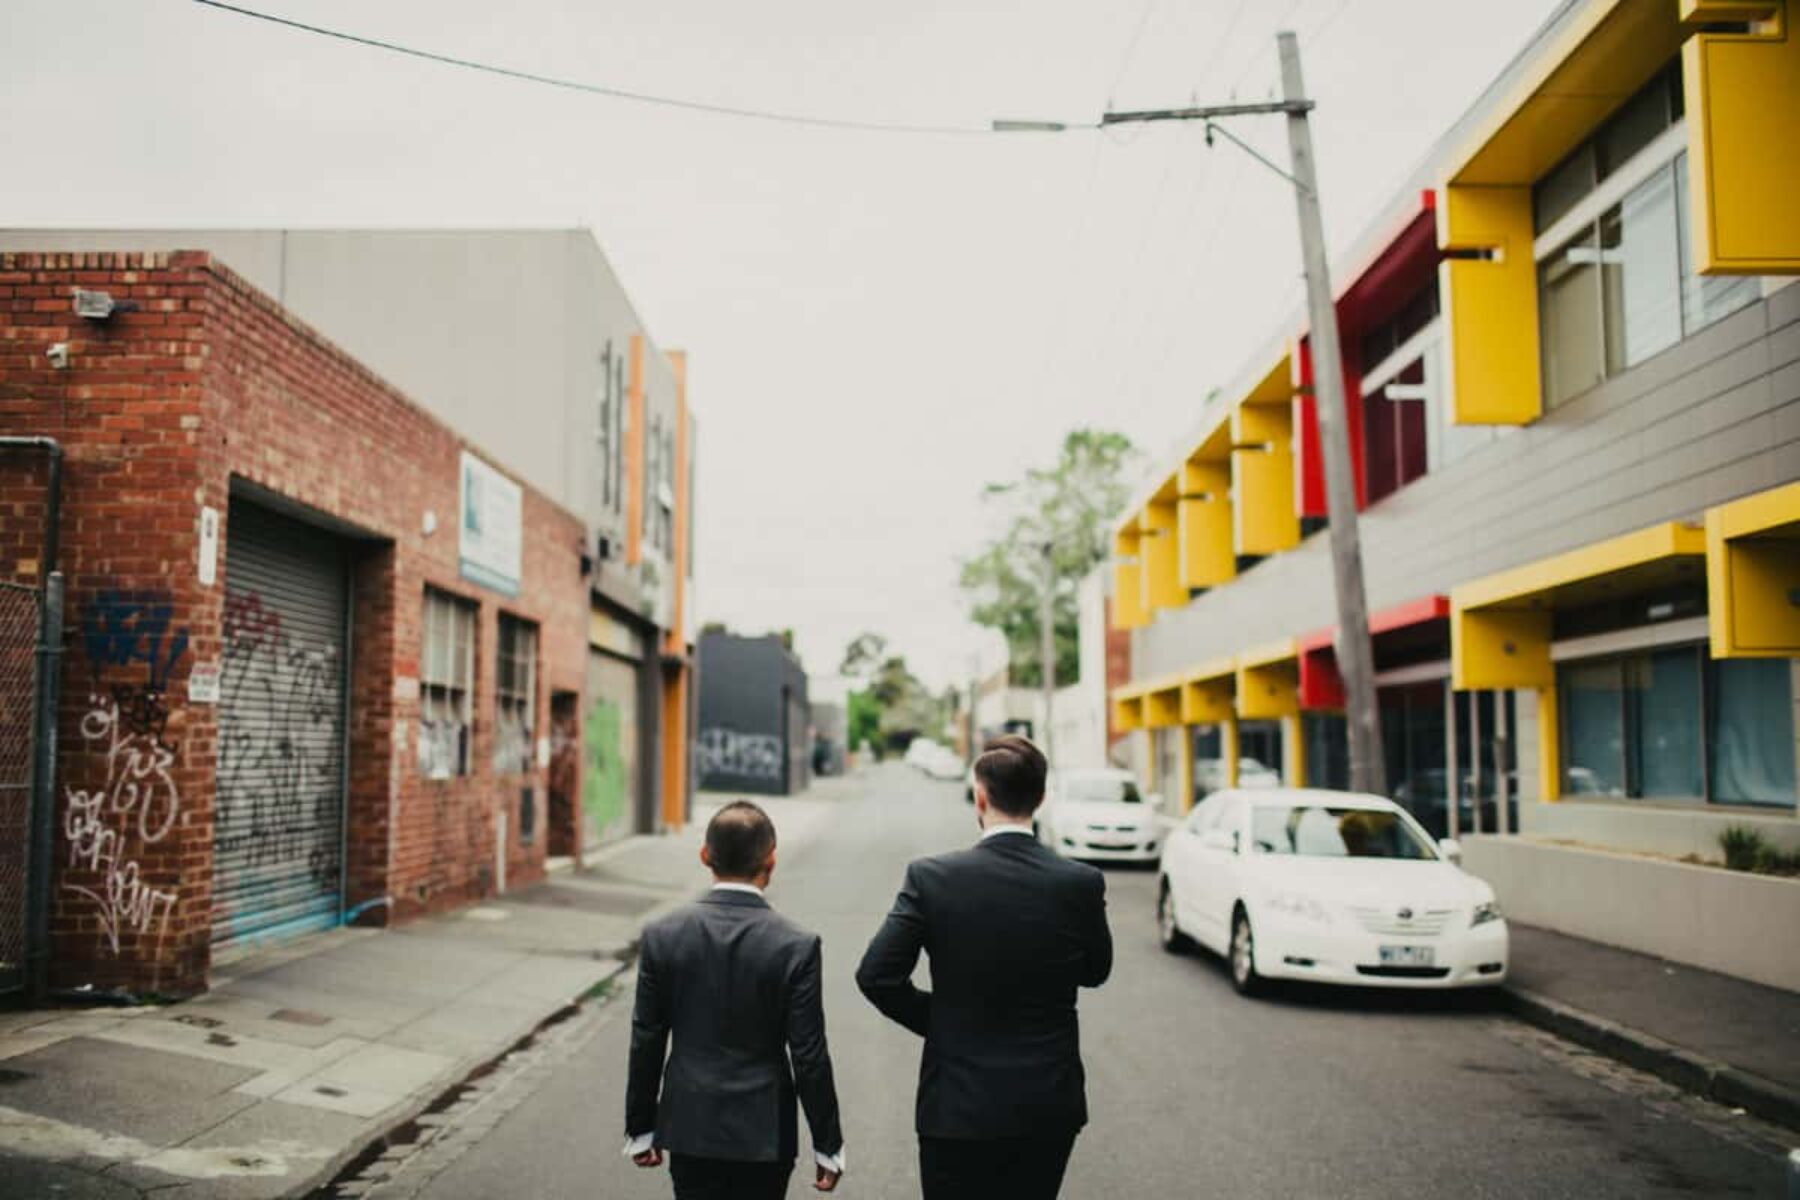 same sex industrial Melbourne wedding